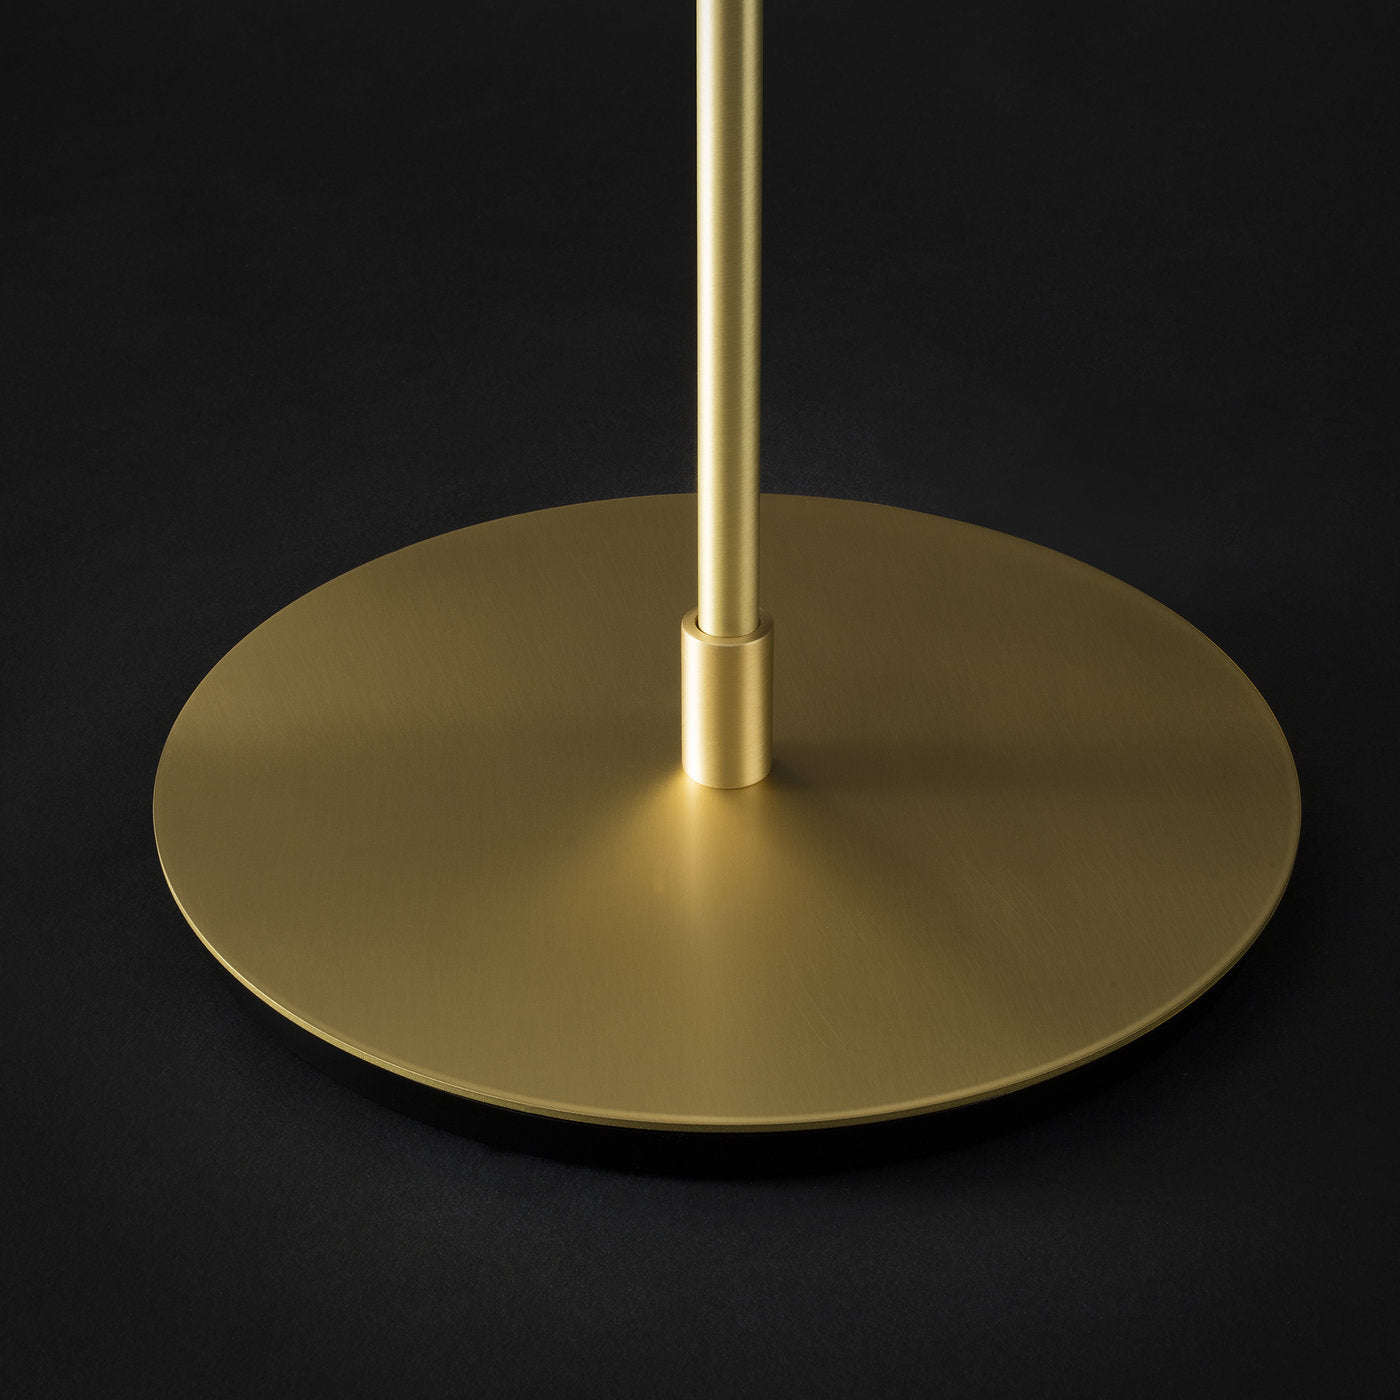 Biba Table Lamp by Lorenza Bozzoli - Alternative view 2